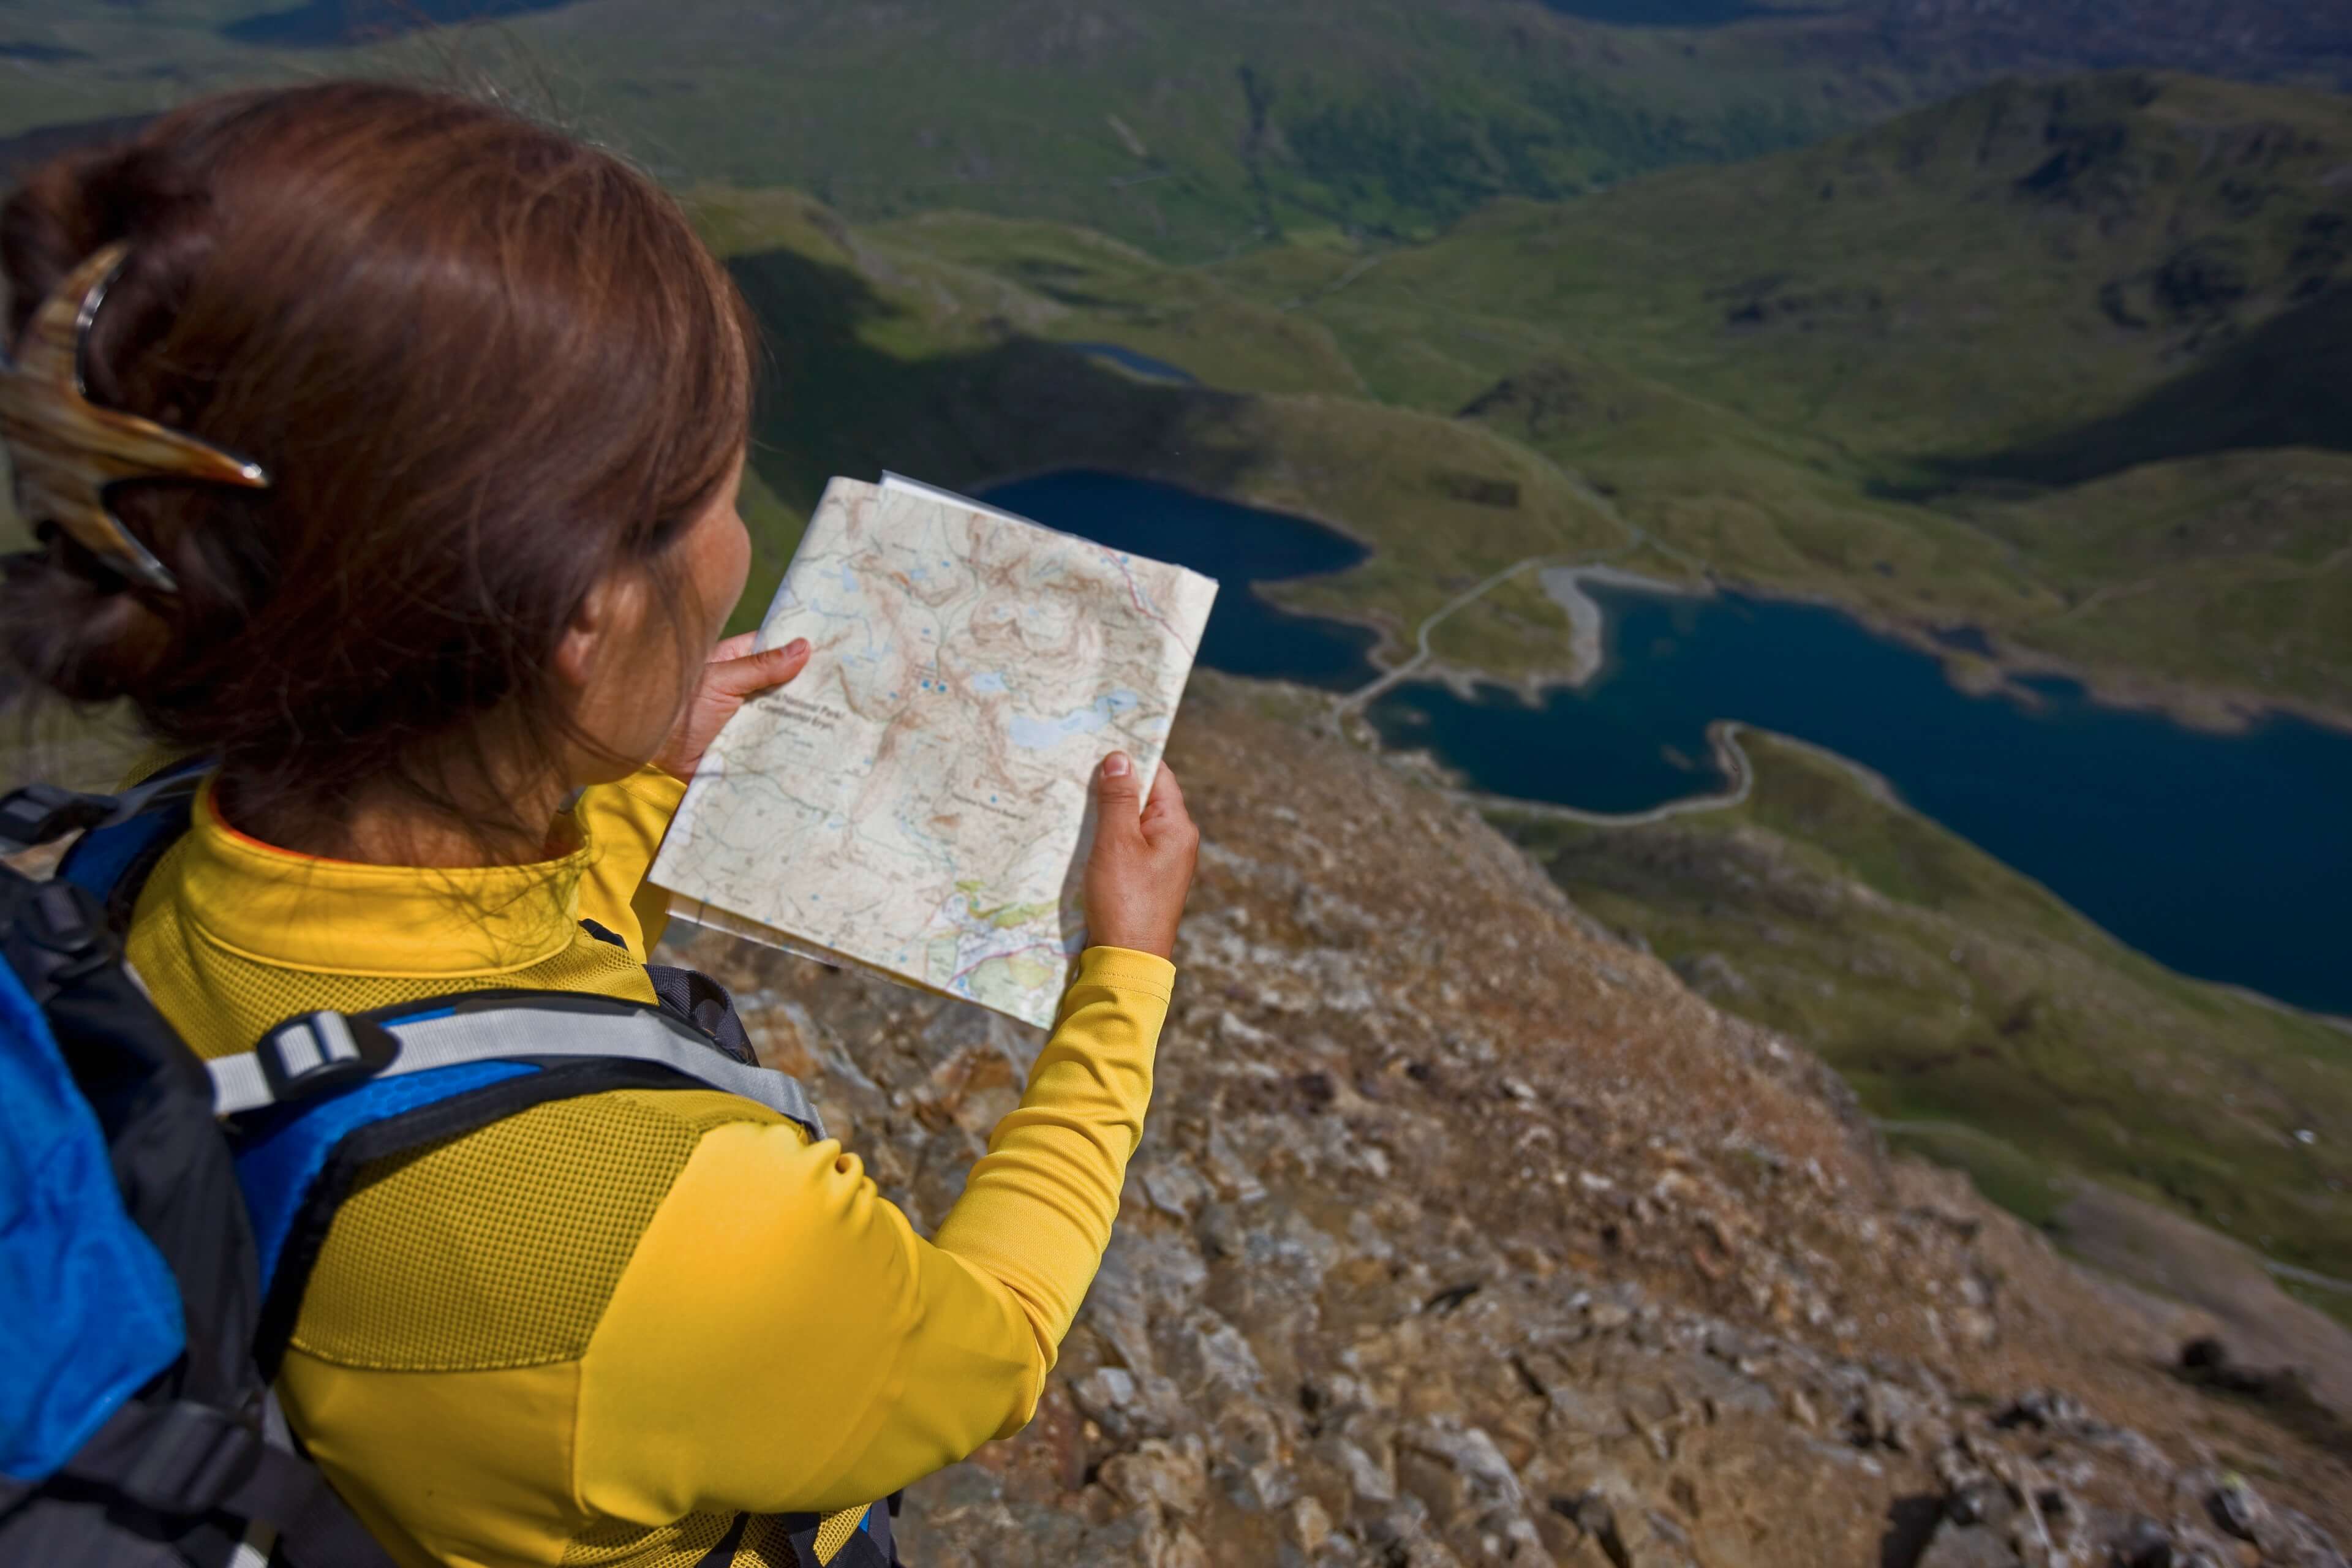 Over-the-shoulder shot of hiker reading map on mountainside.